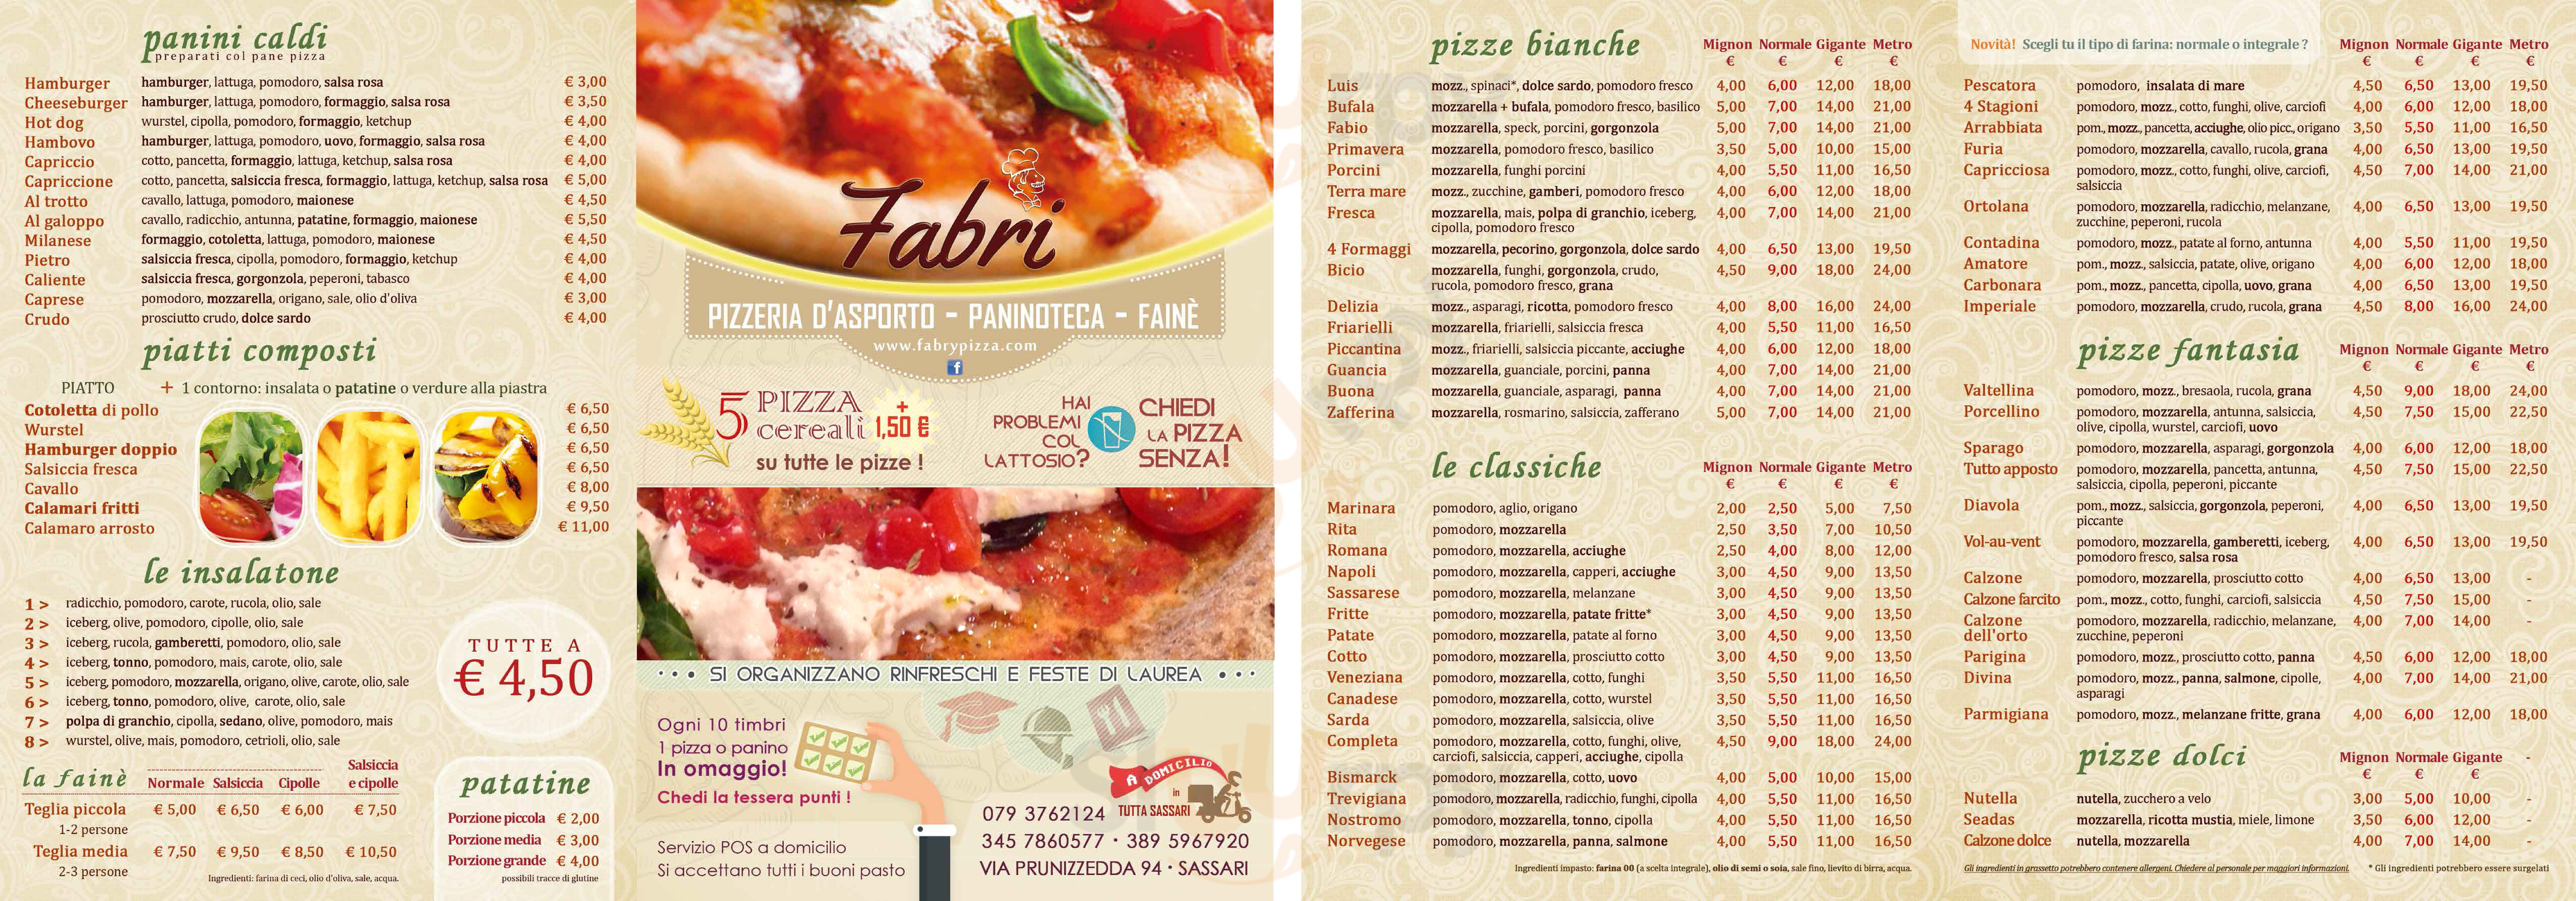 Fabry Pizza Sassari menù 1 pagina